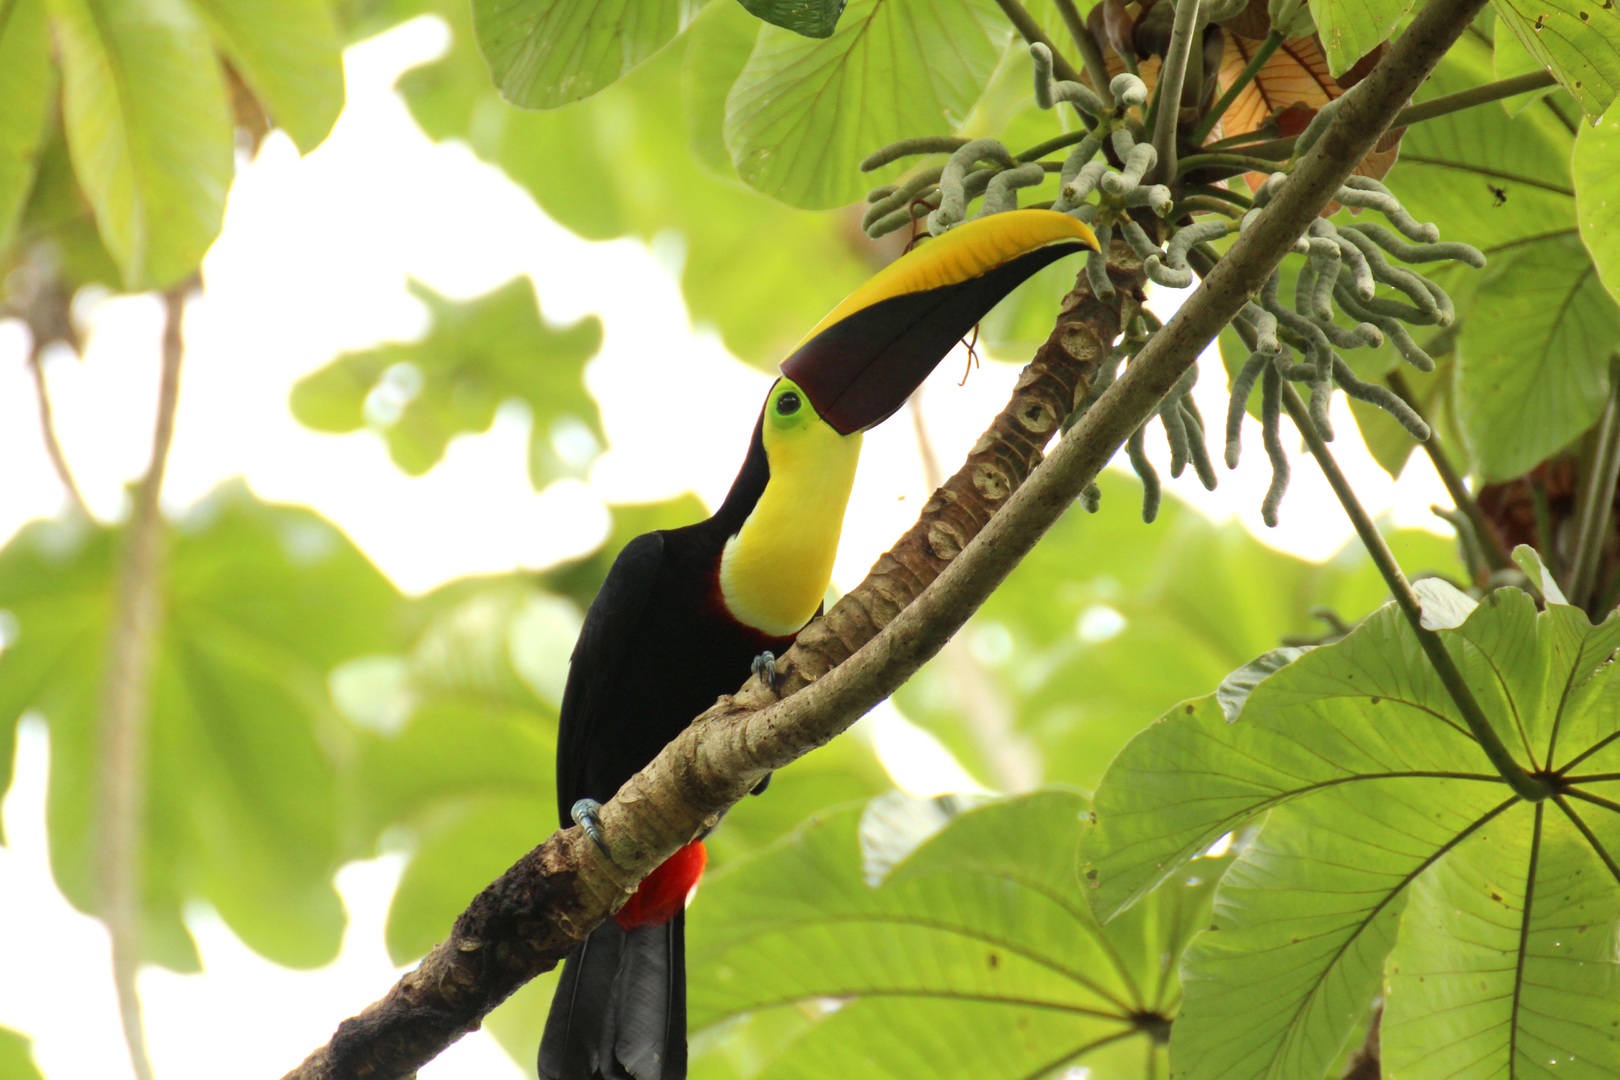 A toucan eating fruits